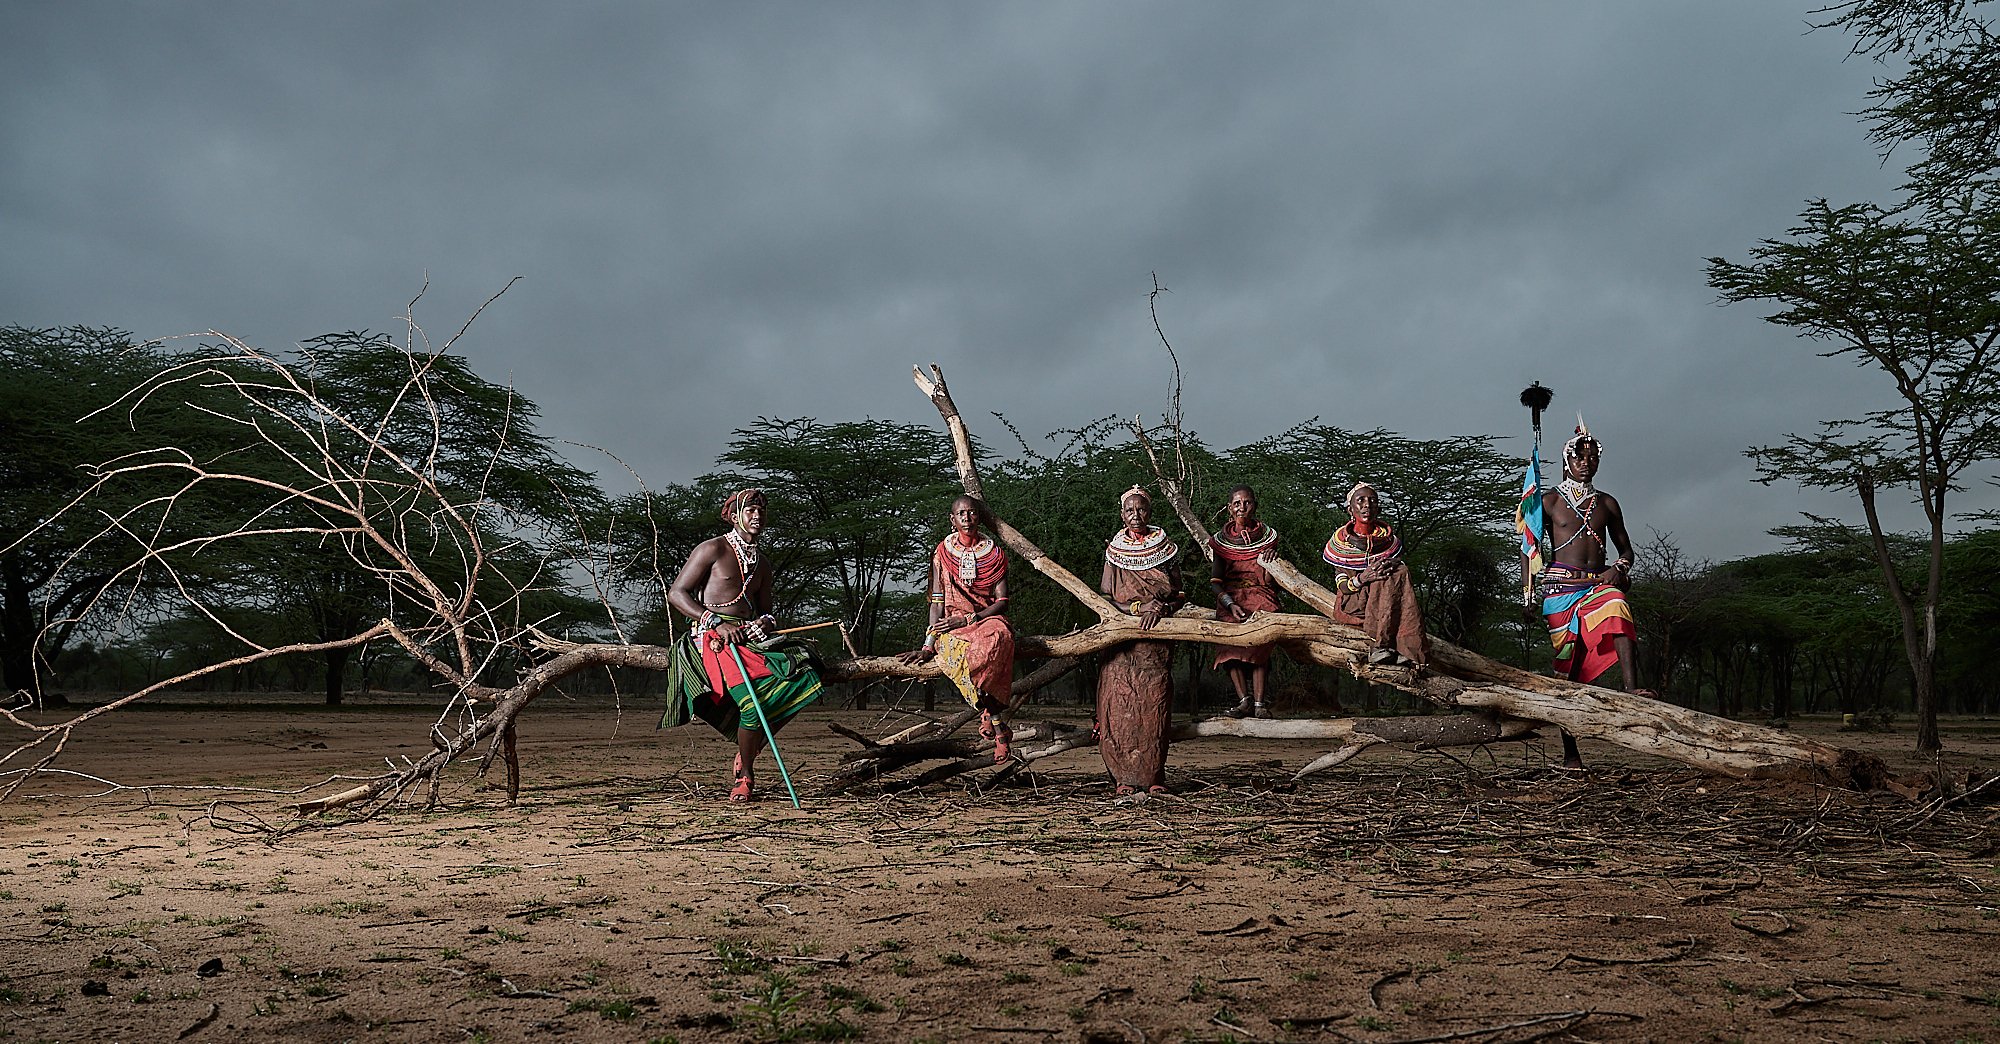 Samburu tribal group, village near Archer's Post, Northern Kenya